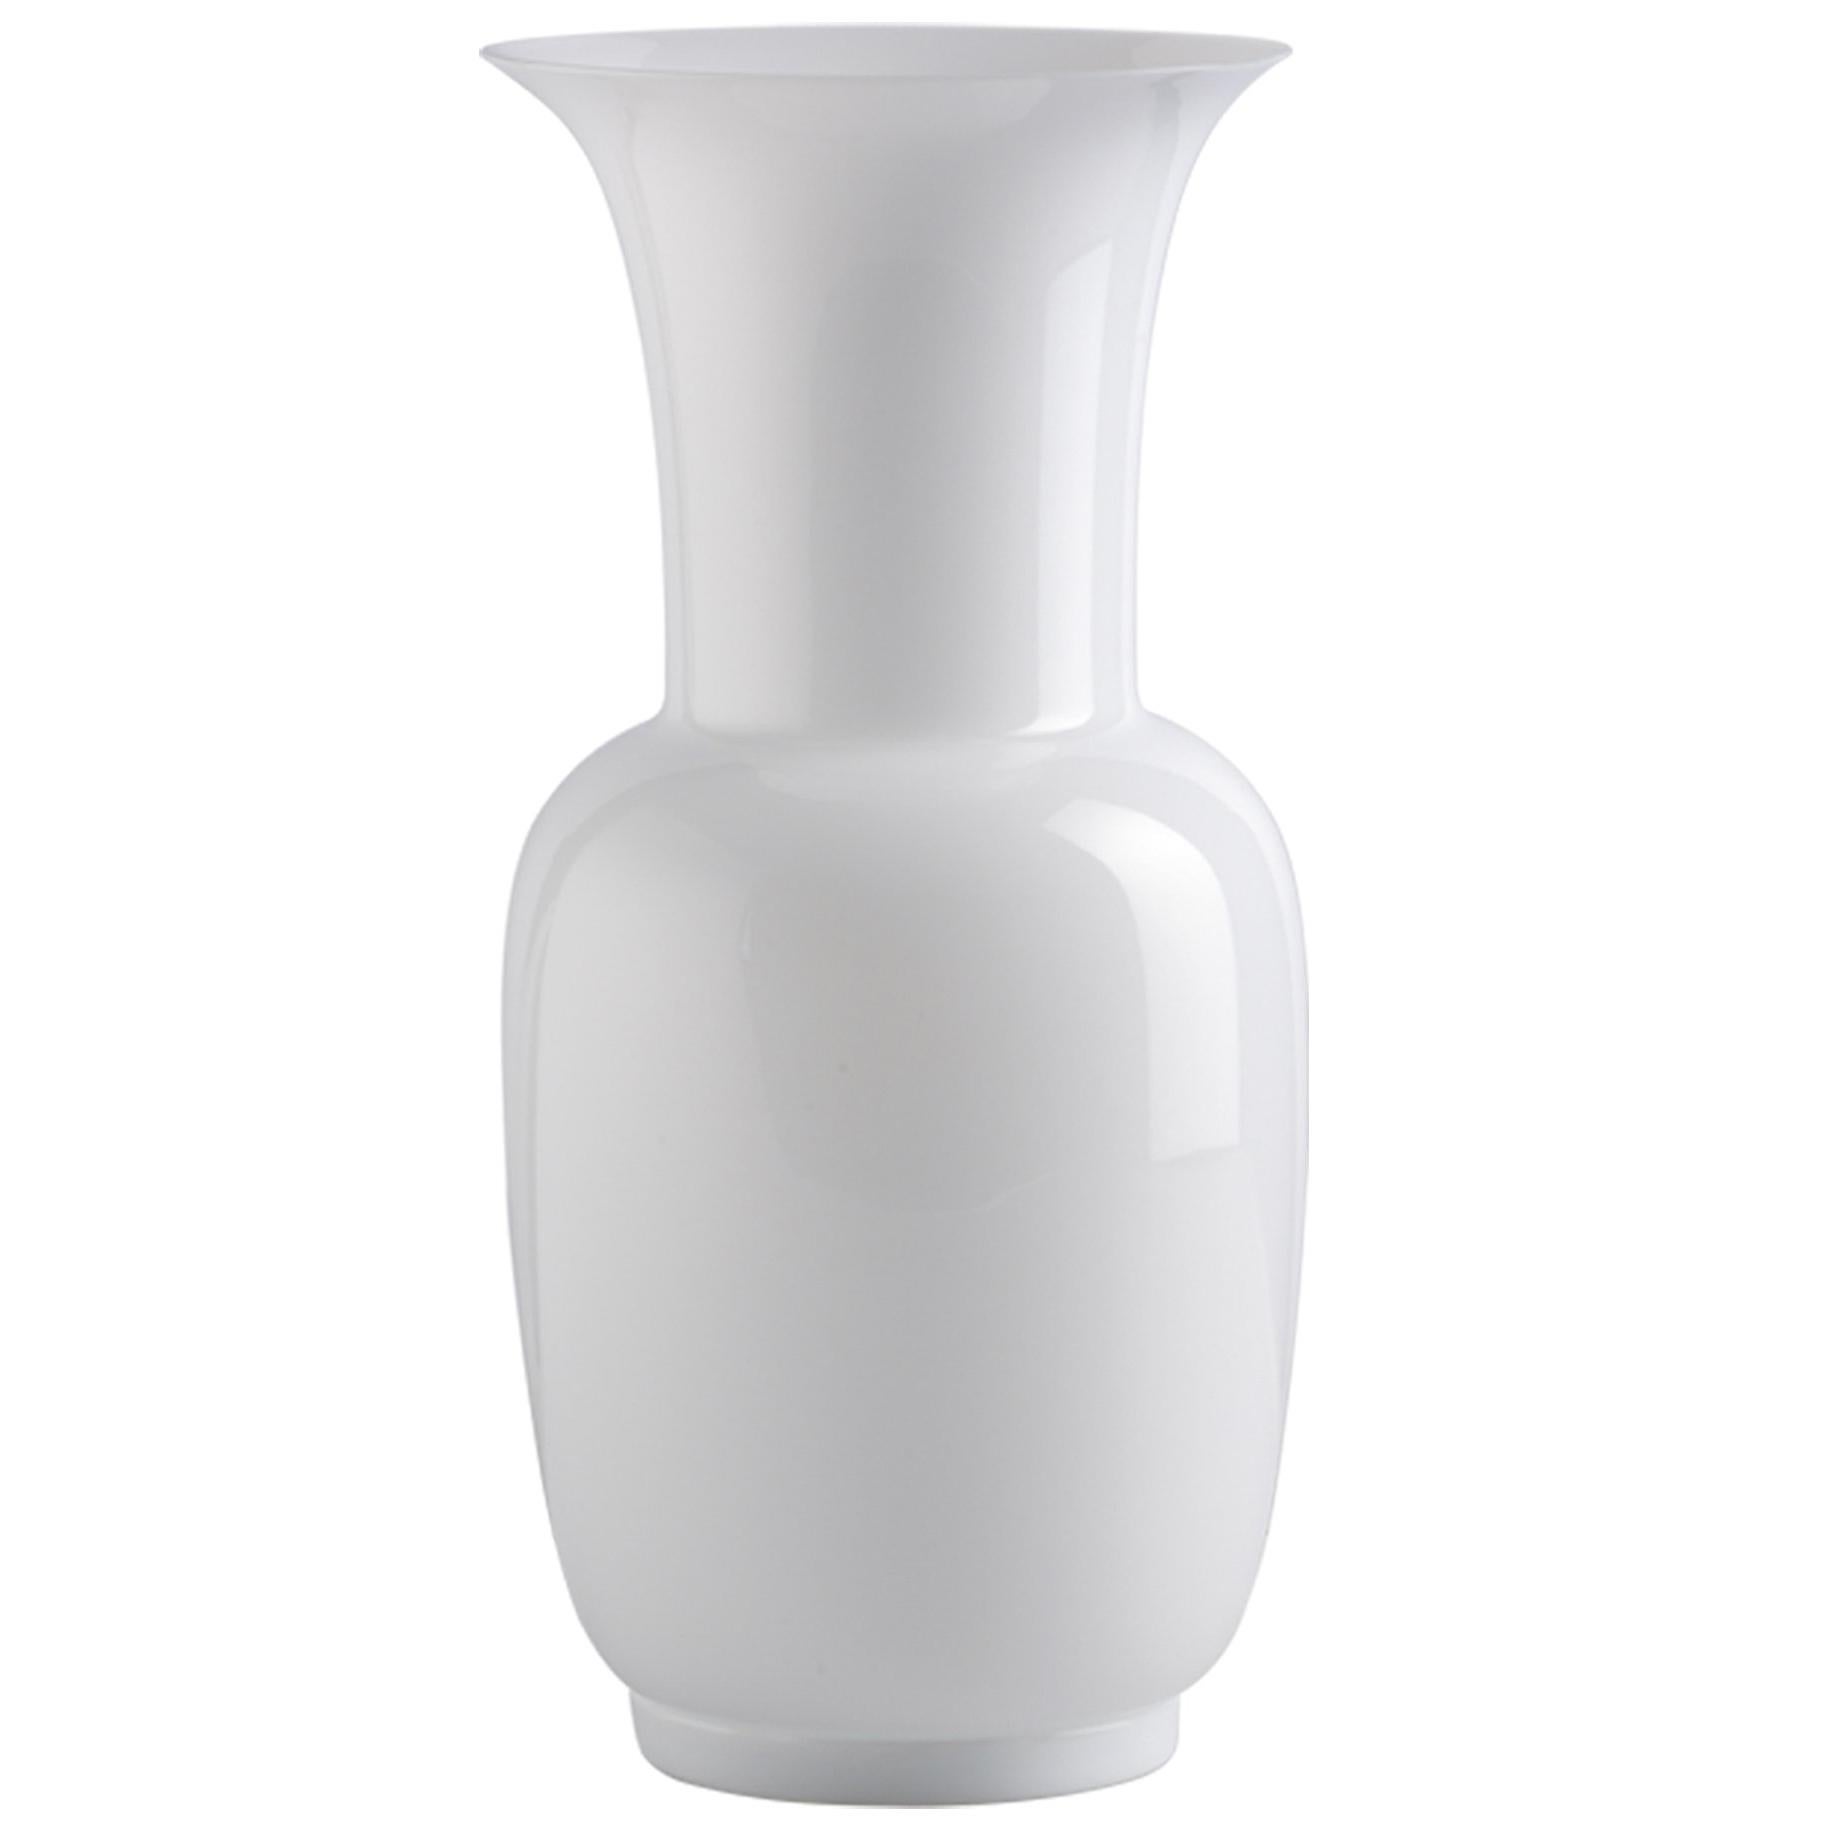 Opalino Glass Vase in Milk-White by Venini